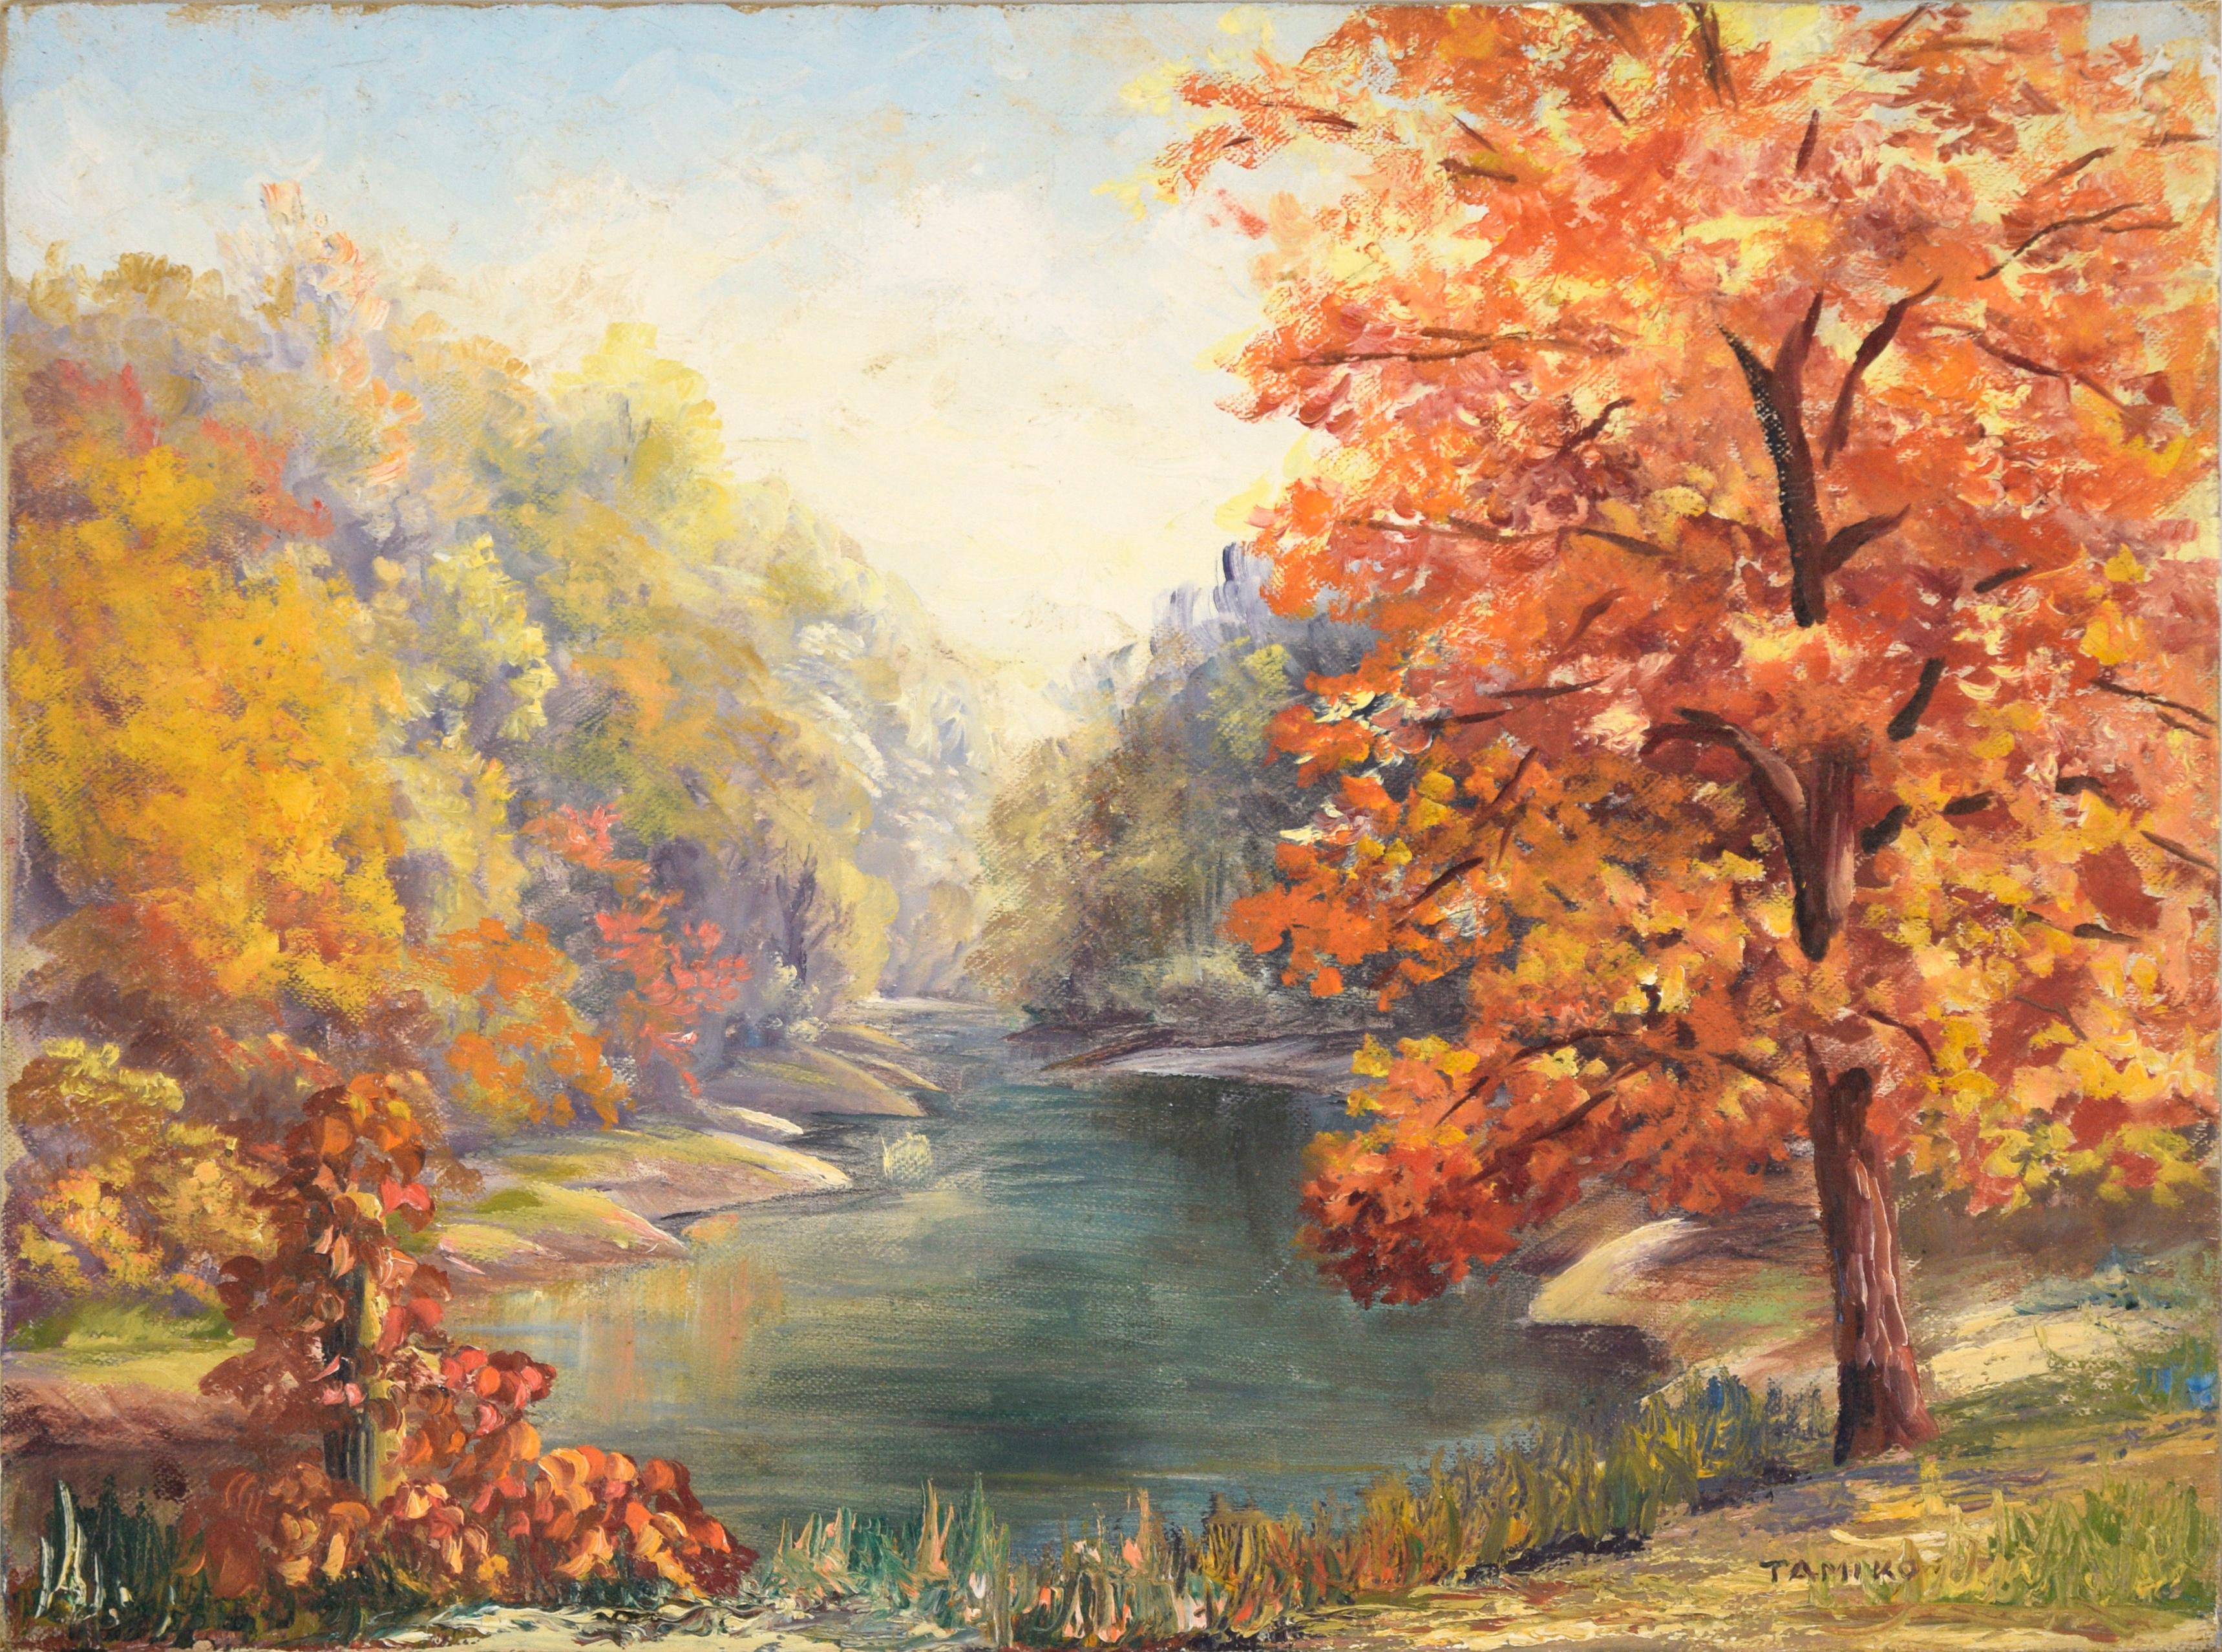 Tamiko Oberholtzer Landscape Painting - Autumn by the Stream - Landscape